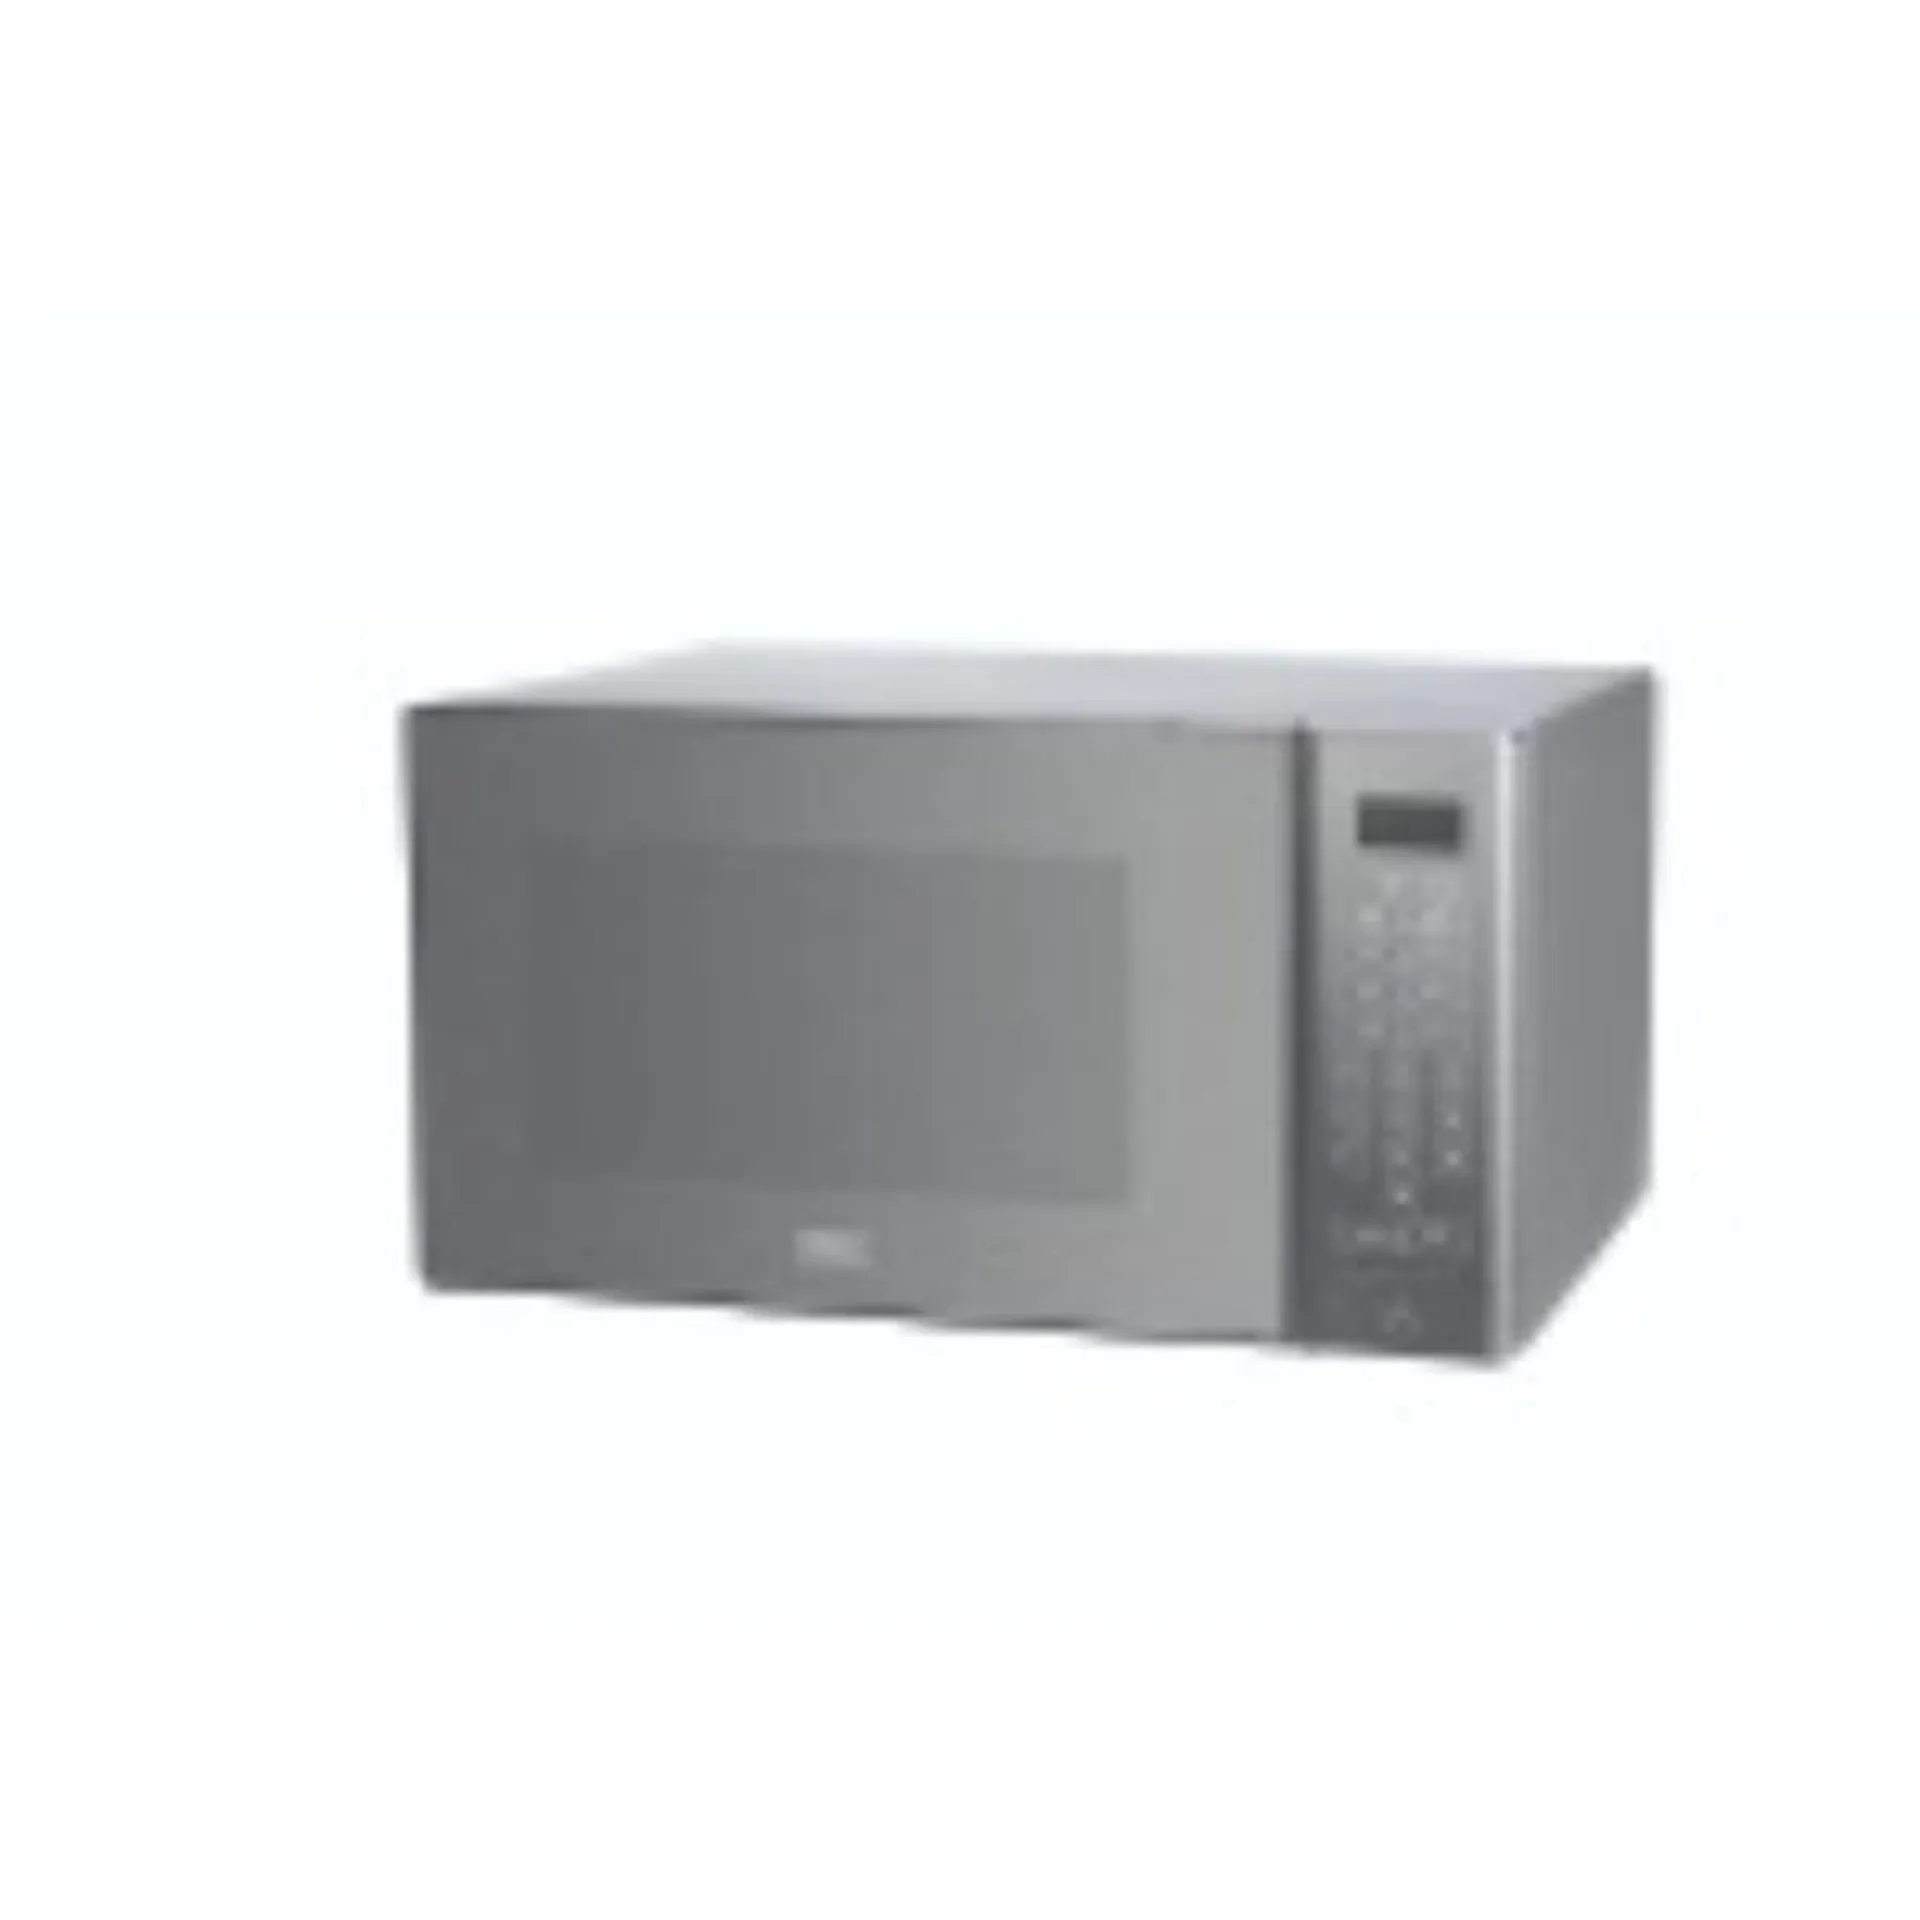 Defy Microwave Oven 30Lt DMO390